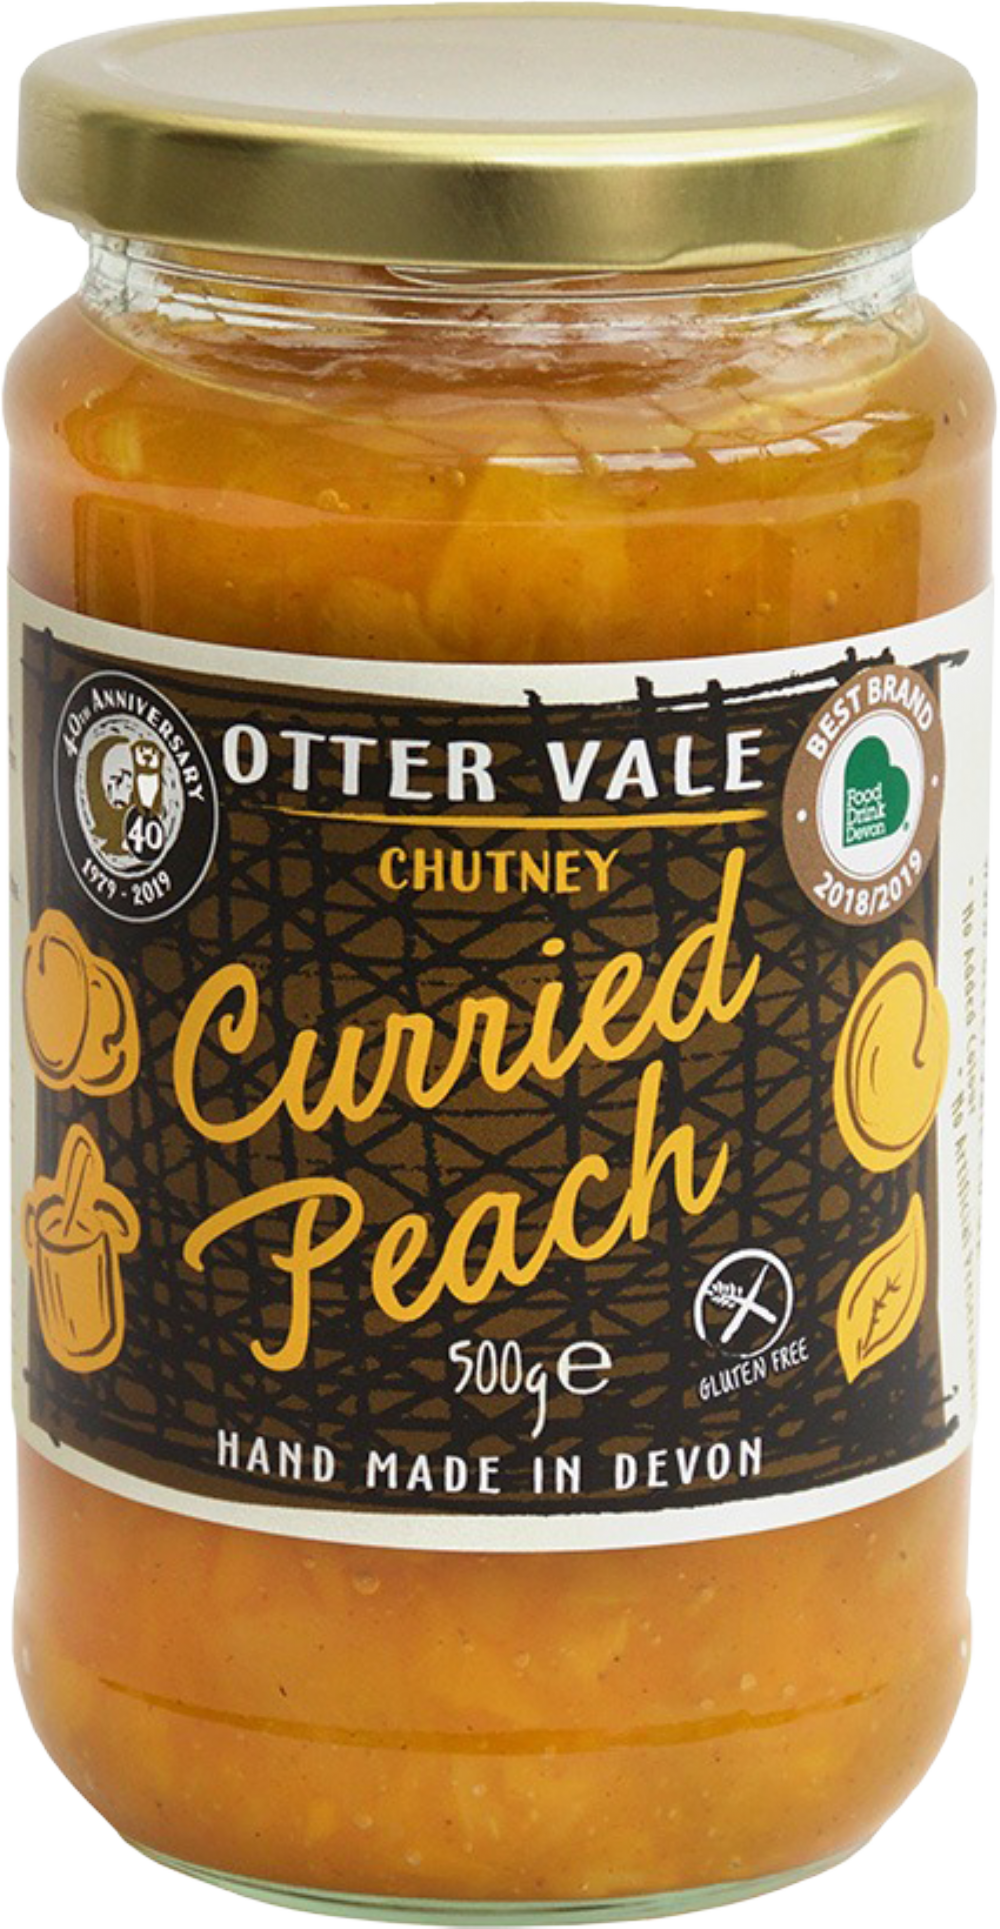 OTTER VALE Curried Peach Chutney 500g